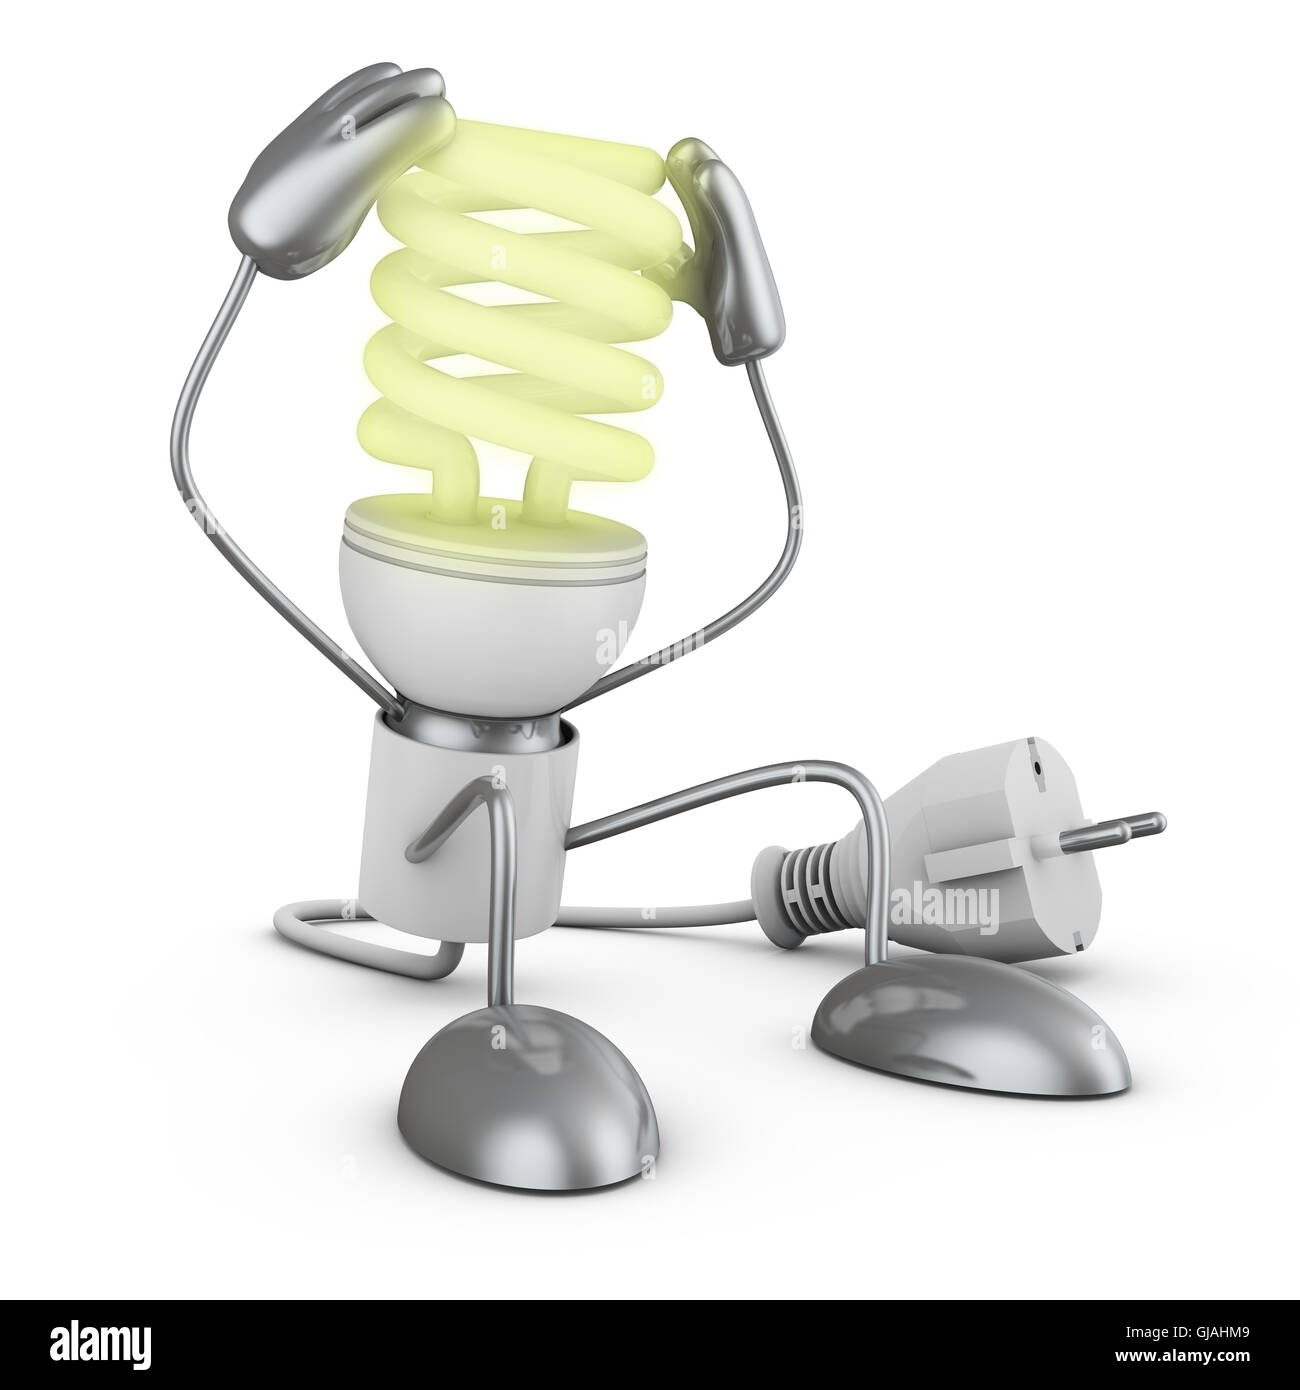 Lampada risparmio energetico tenendo le mani dietro la testa. 3D render. Foto Stock